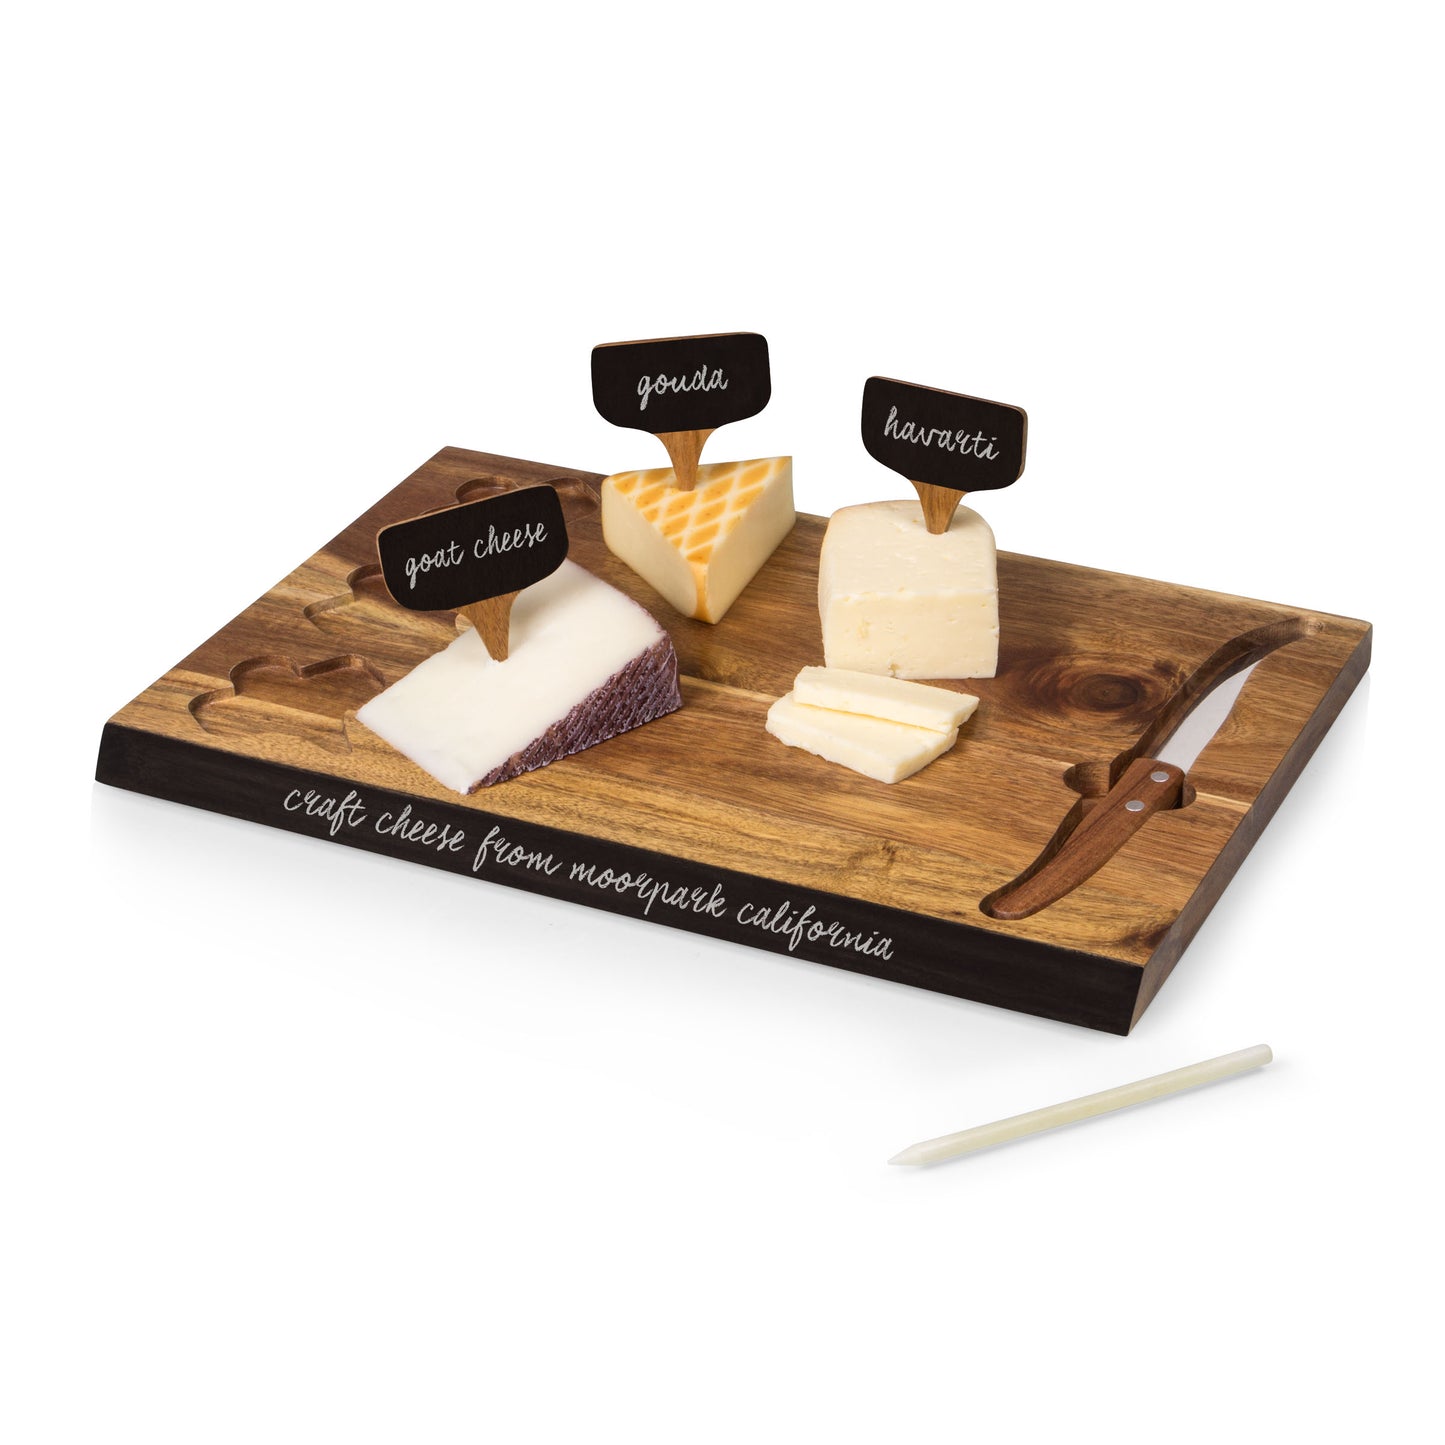 New England Patriots - Delio Acacia Cheese Cutting Board & Tools Set